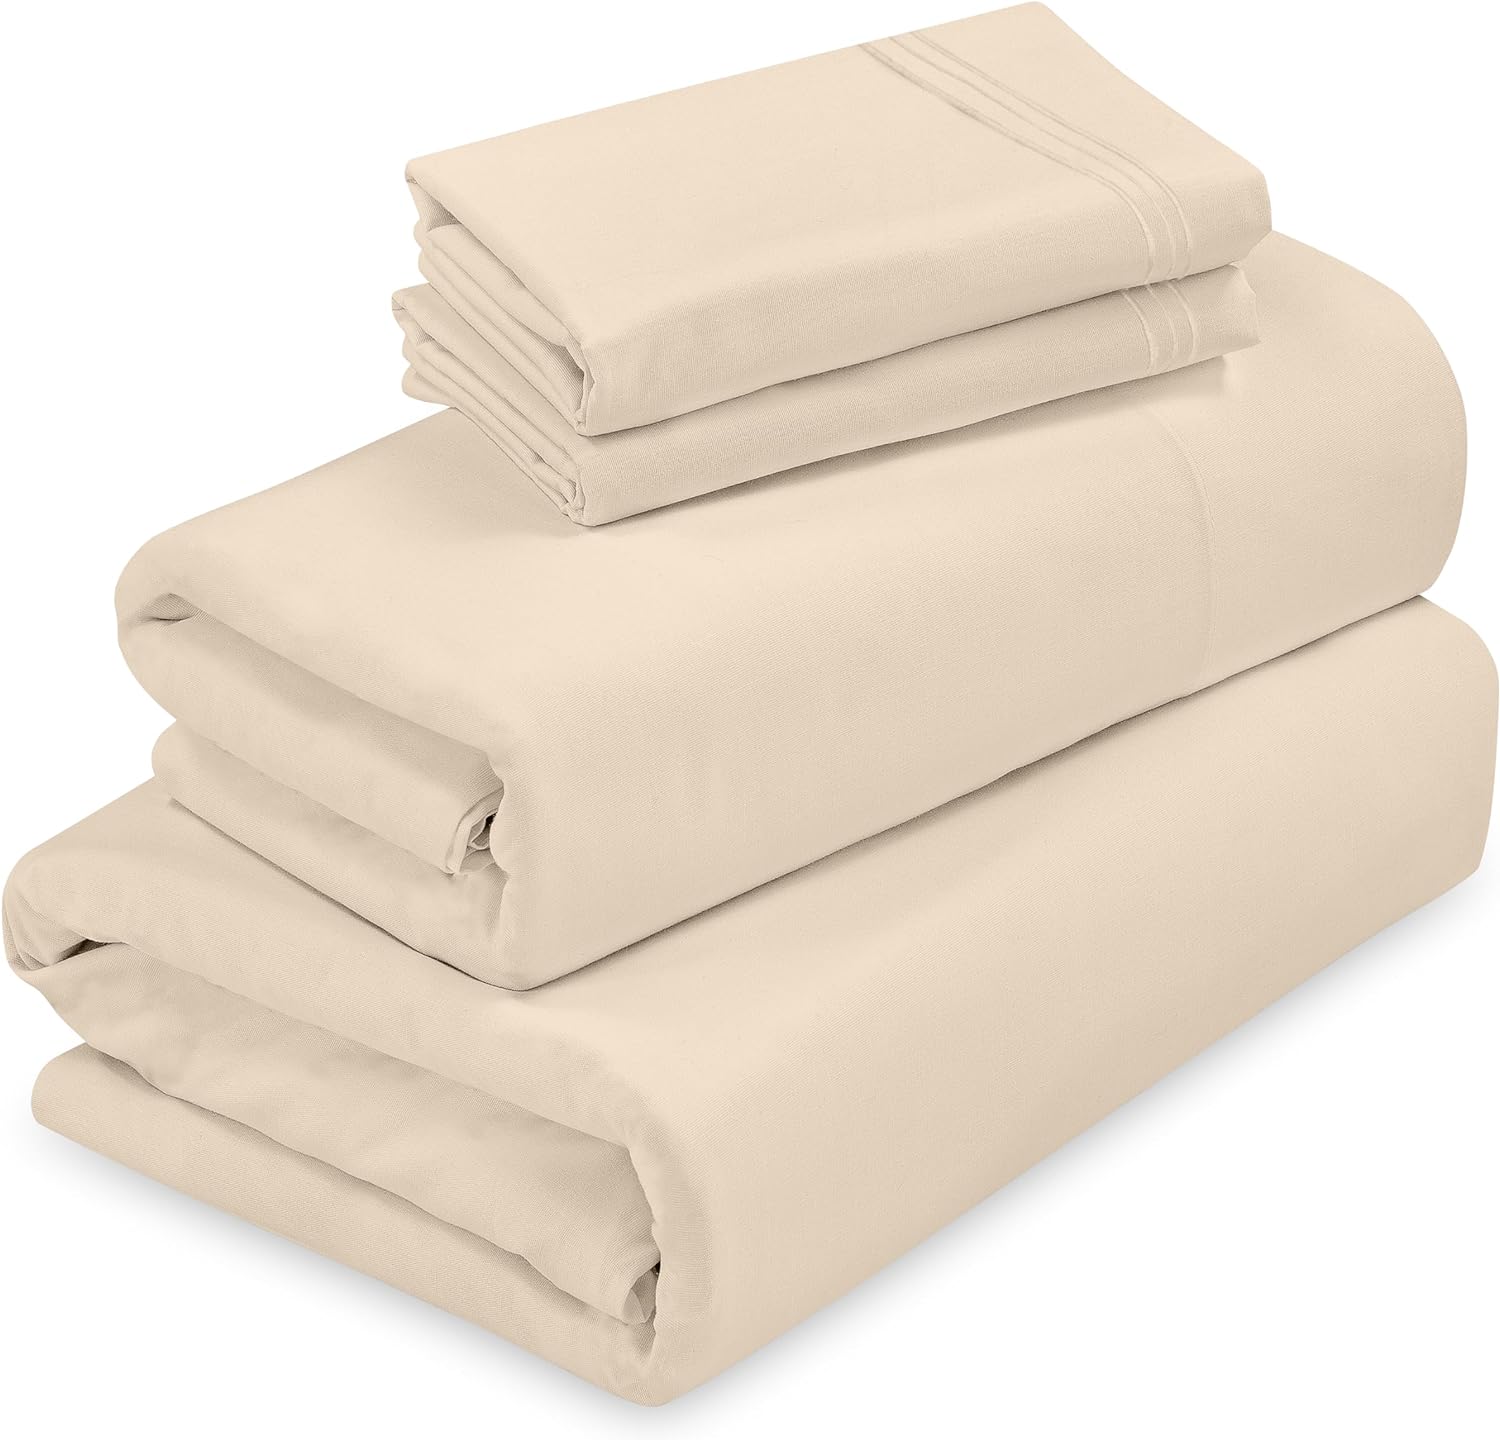 ROYALE LINENS - 4 Piece King Bed Sheet - Soft Brushed Microfiber 1800 Bedding Set - 1 Fitted Sheet, 1 Flat Sheet, 2 Pillow Cases - Wrinkle & Fade Resistant Luxury King Size Sheet Set (King, Sand)